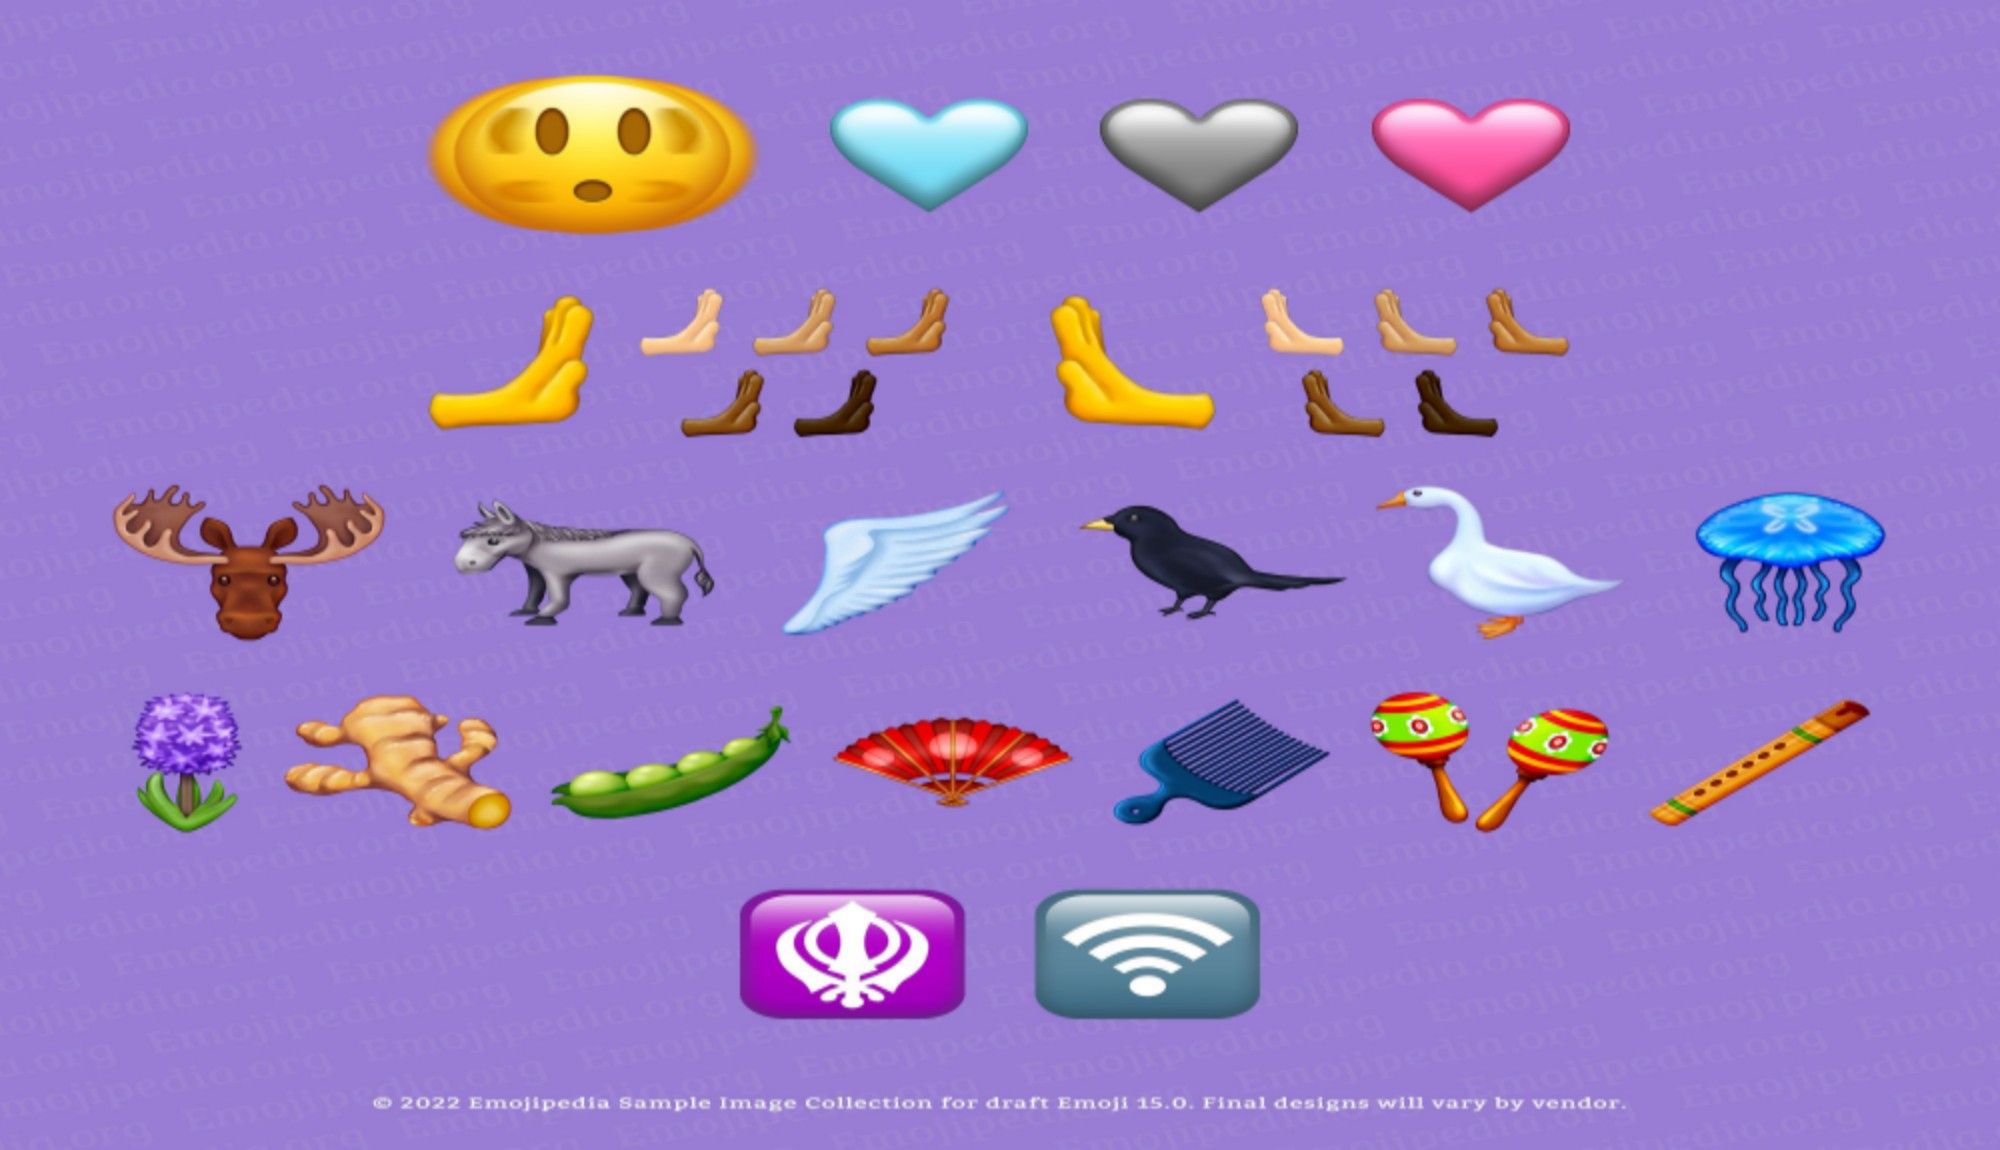 Emoji 15 by Unicode